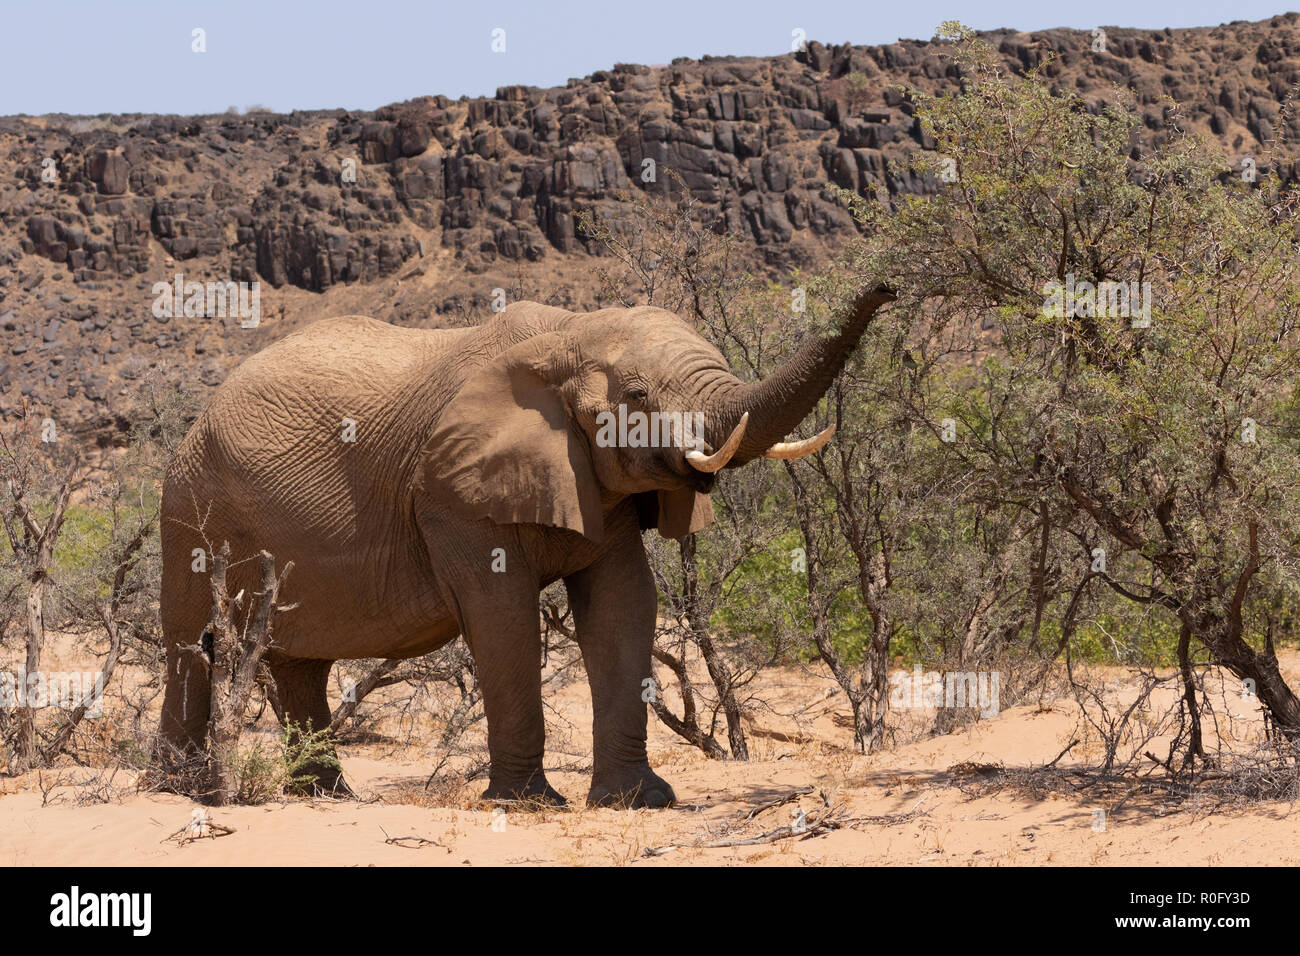 Pregnant African elephant feeding, Haub river bed, Damaraland, Namibia Africa Stock Photo